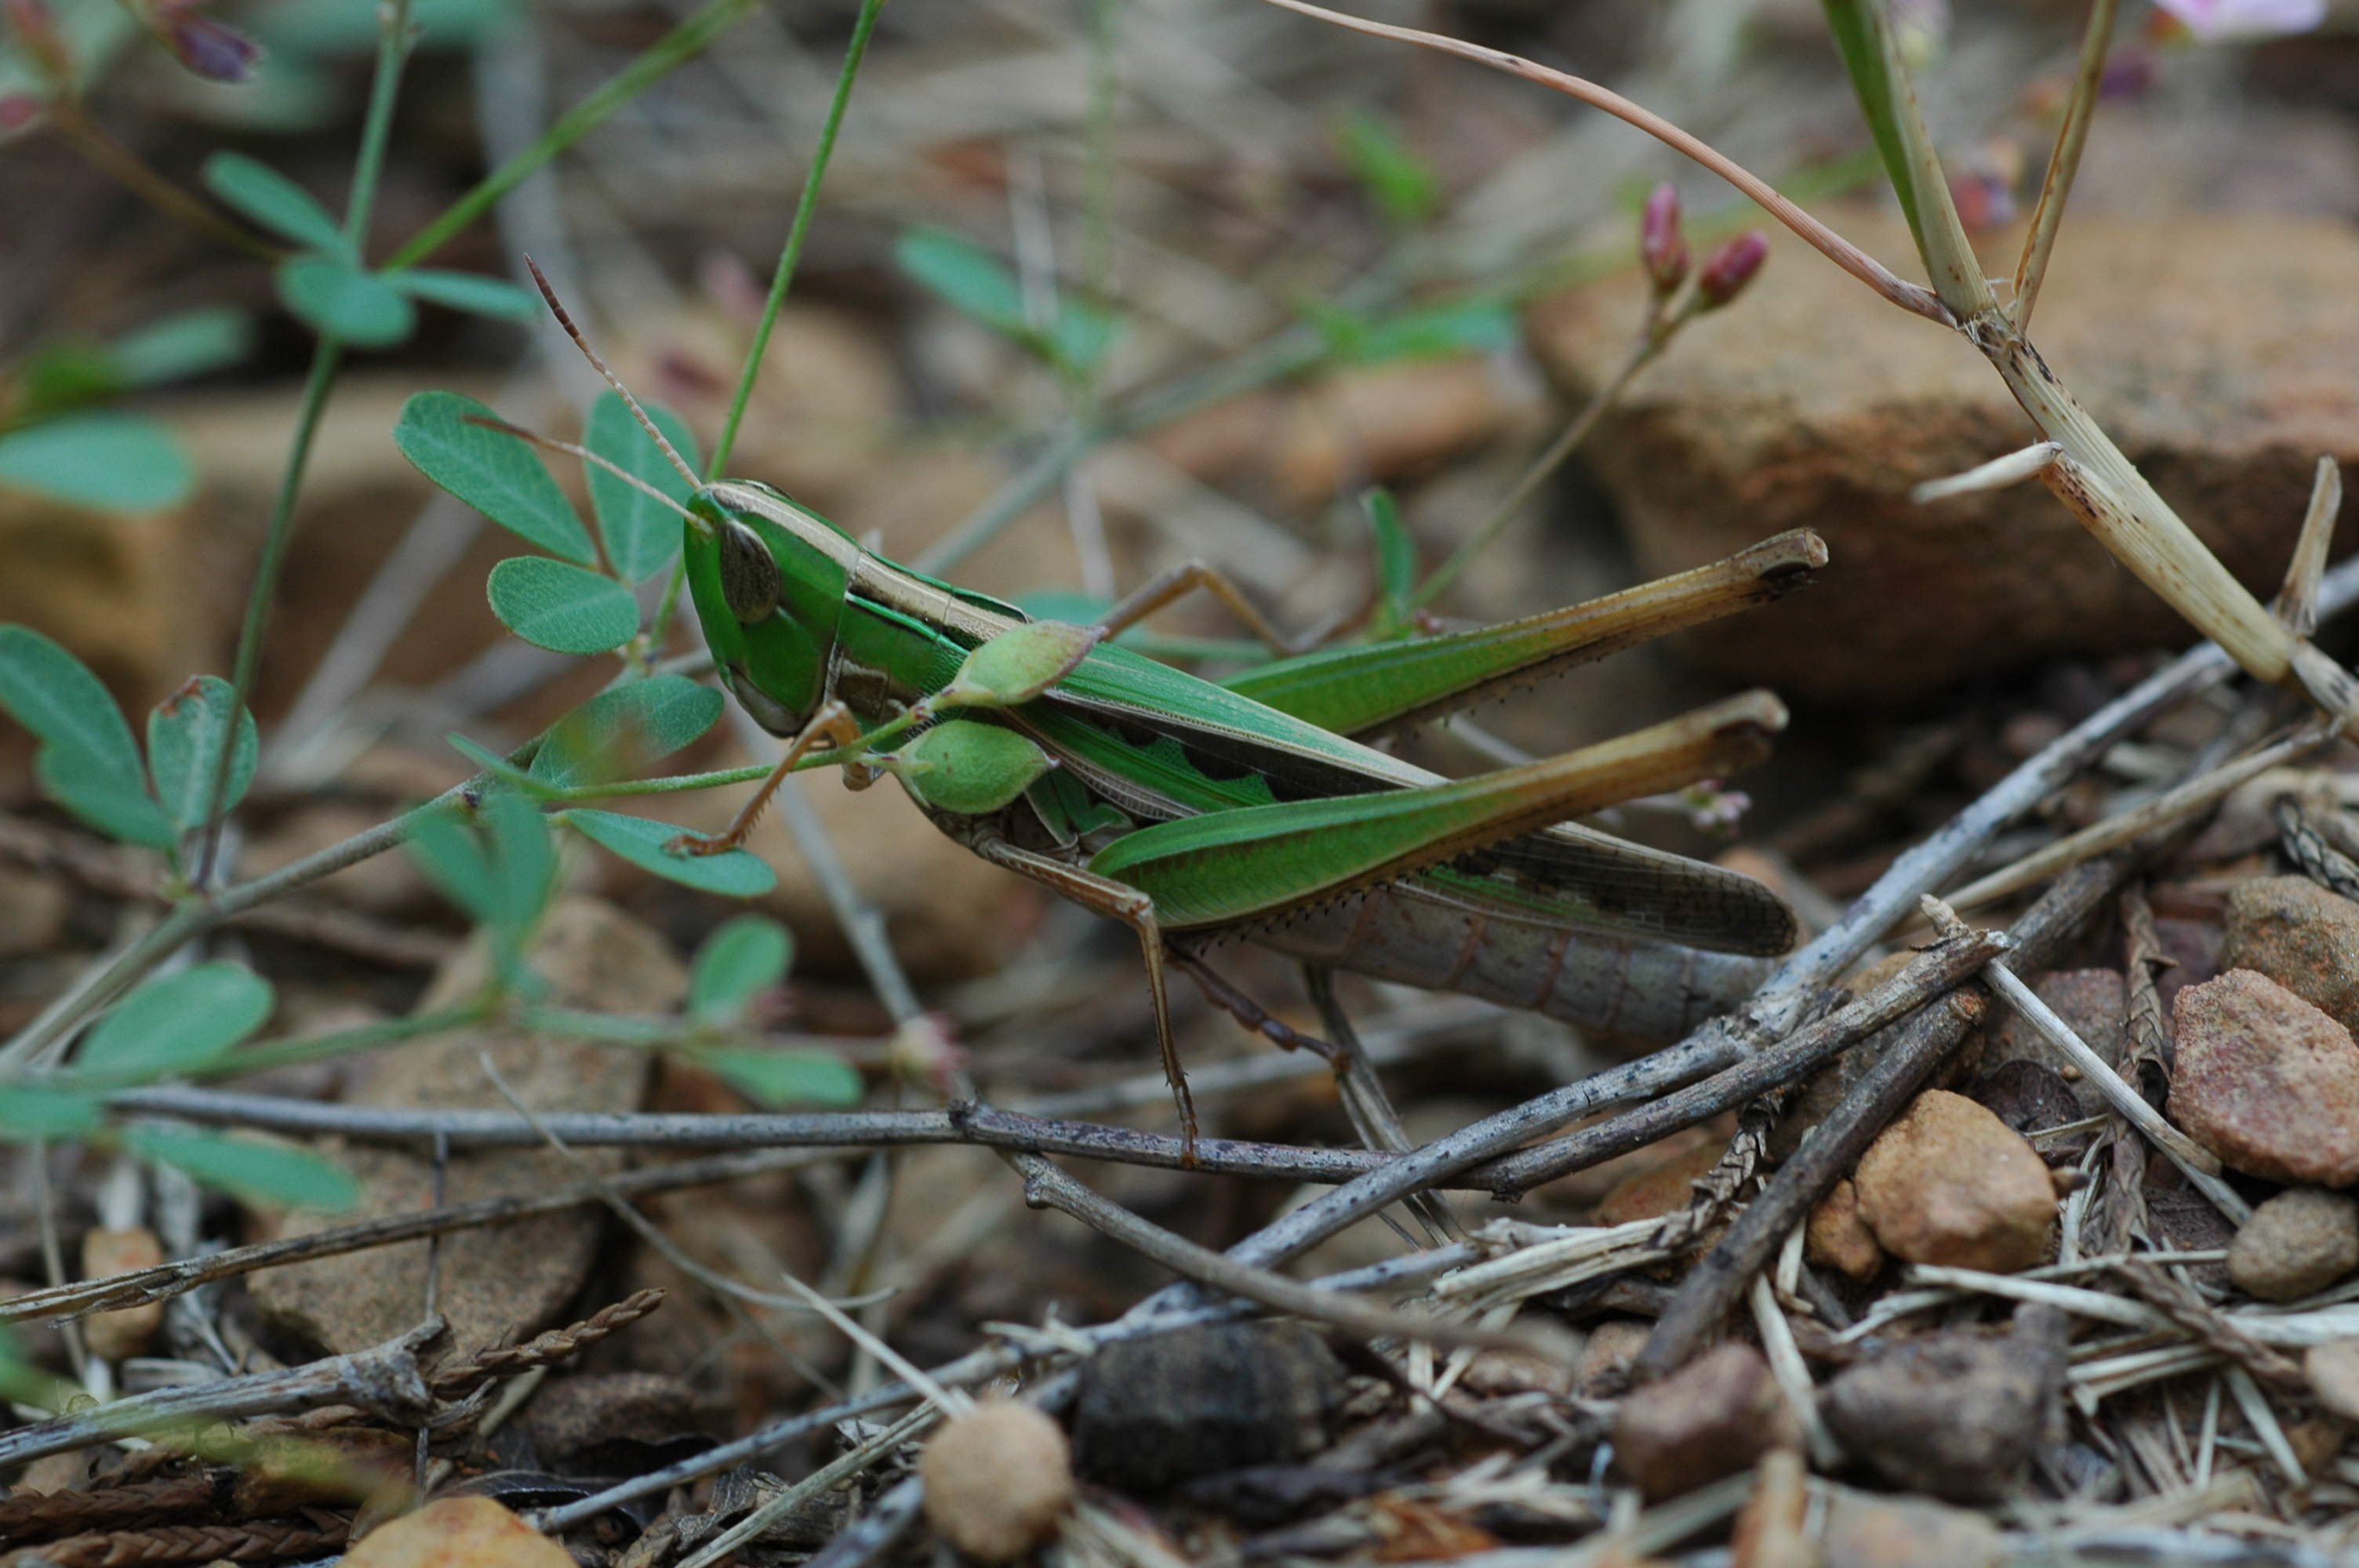 File:Admirable Grasshopper.JPG - Wikimedia Commons